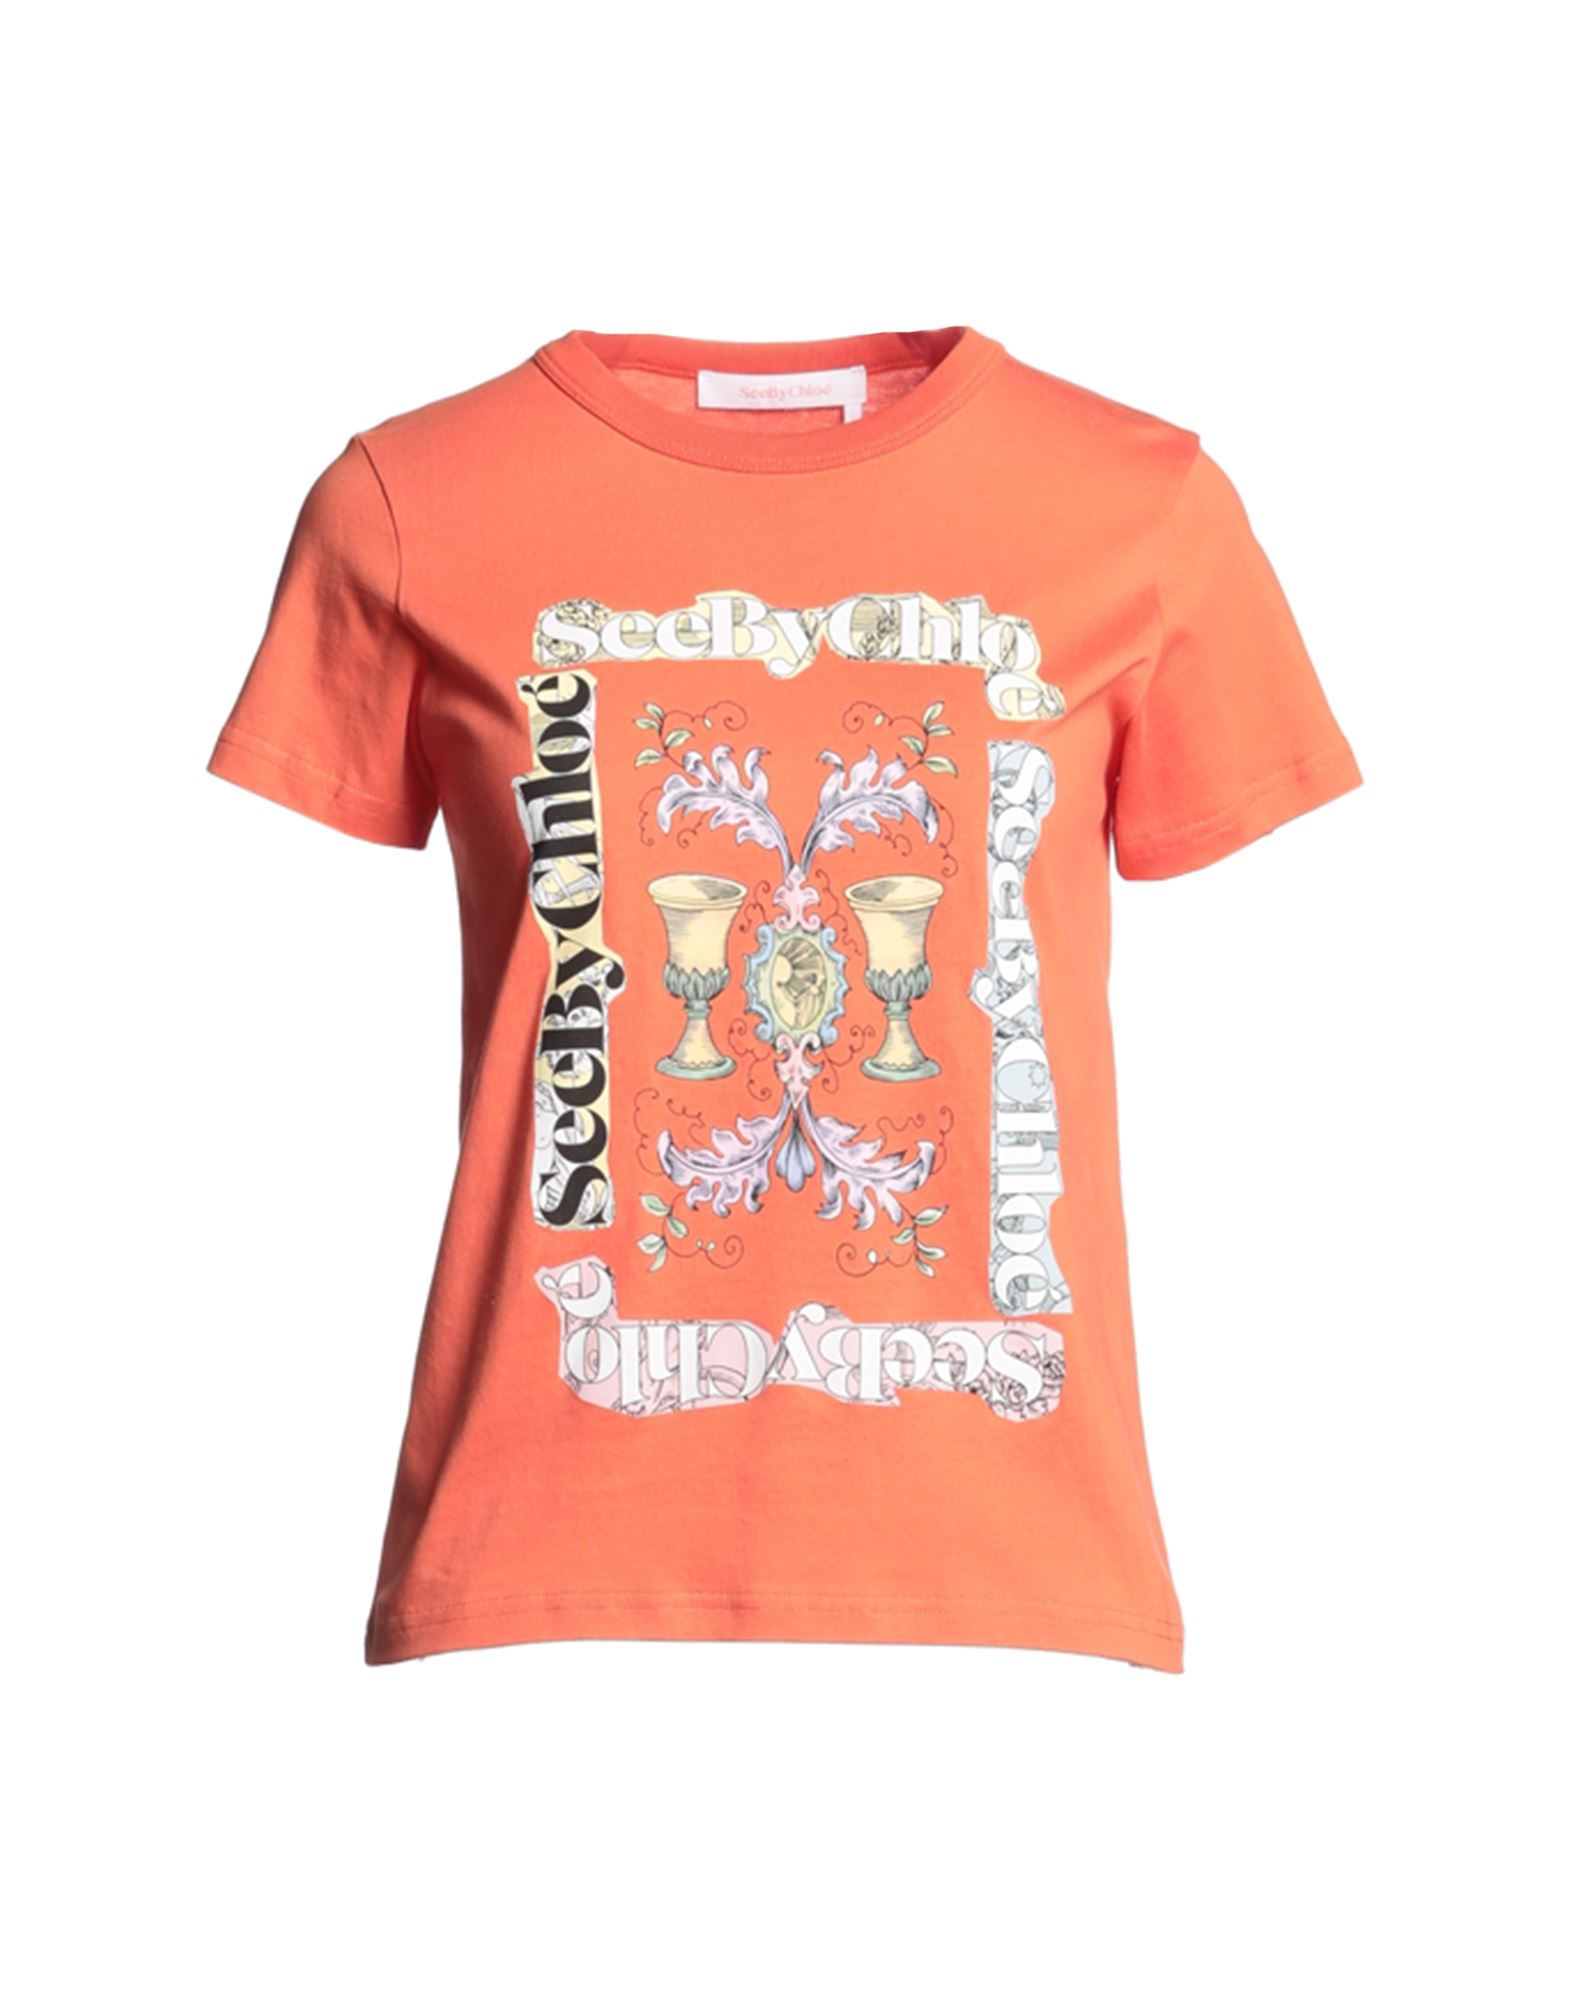 SEE BY CHLOÉ T-shirts Damen Orange von SEE BY CHLOÉ